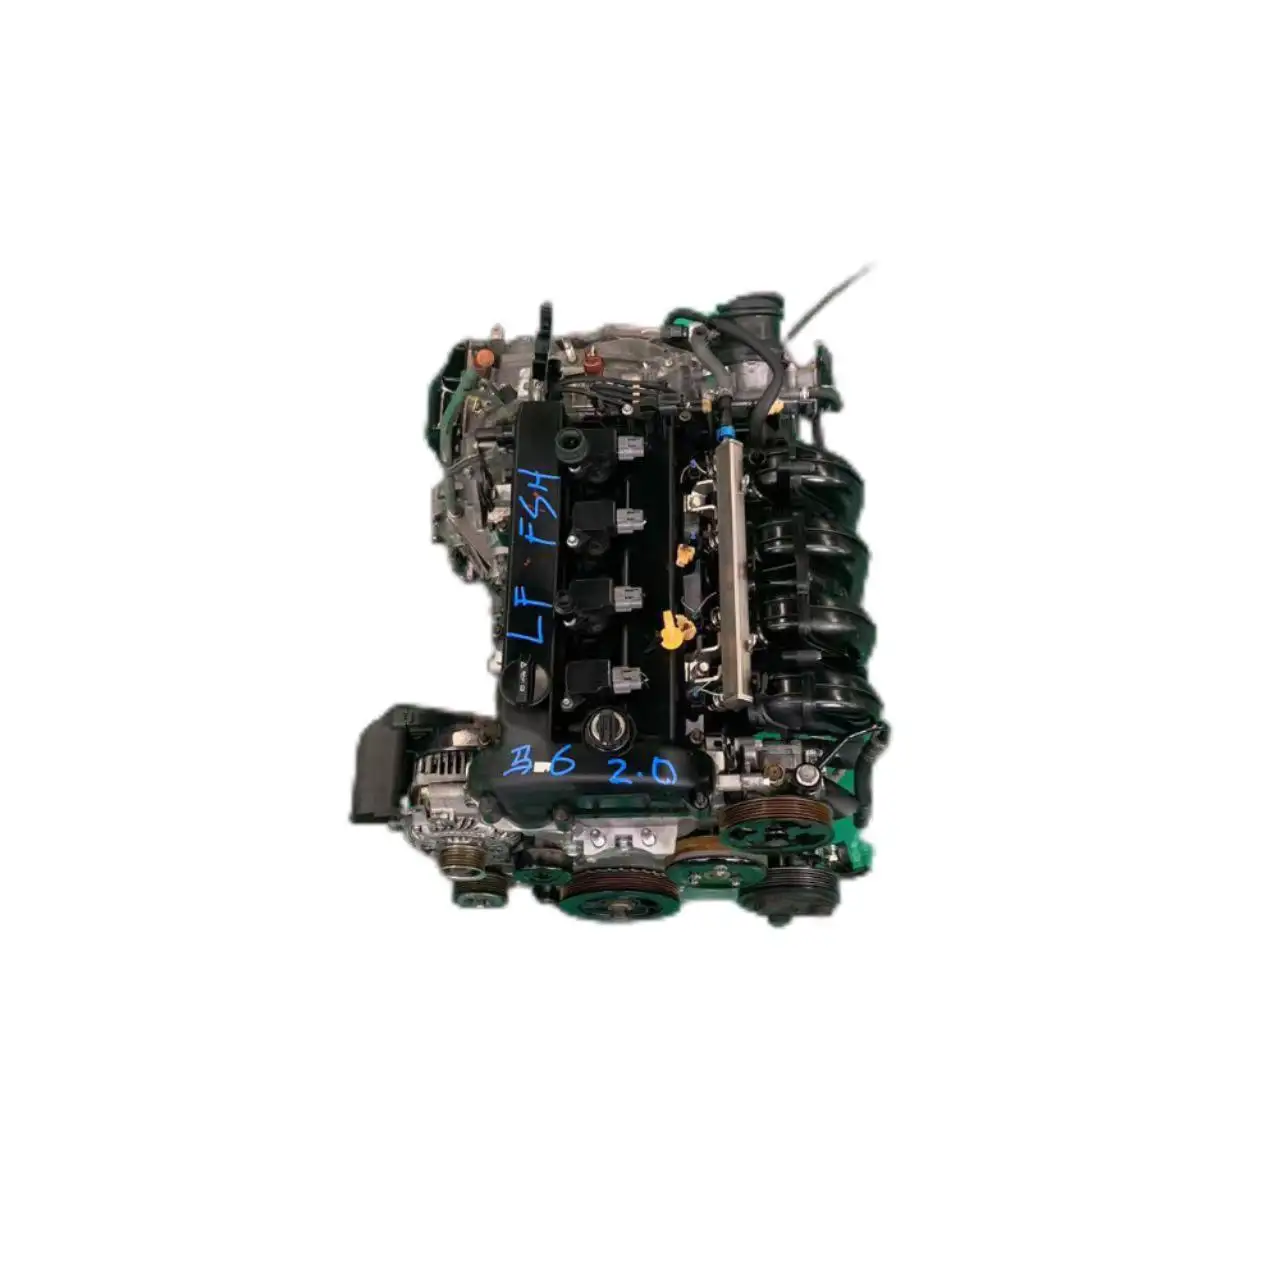 Lf2.0 माज़दा घोड़े के लिए डीजल गैसोलीन इंजन का इस्तेमाल डीजल गैसोलीन इंजन